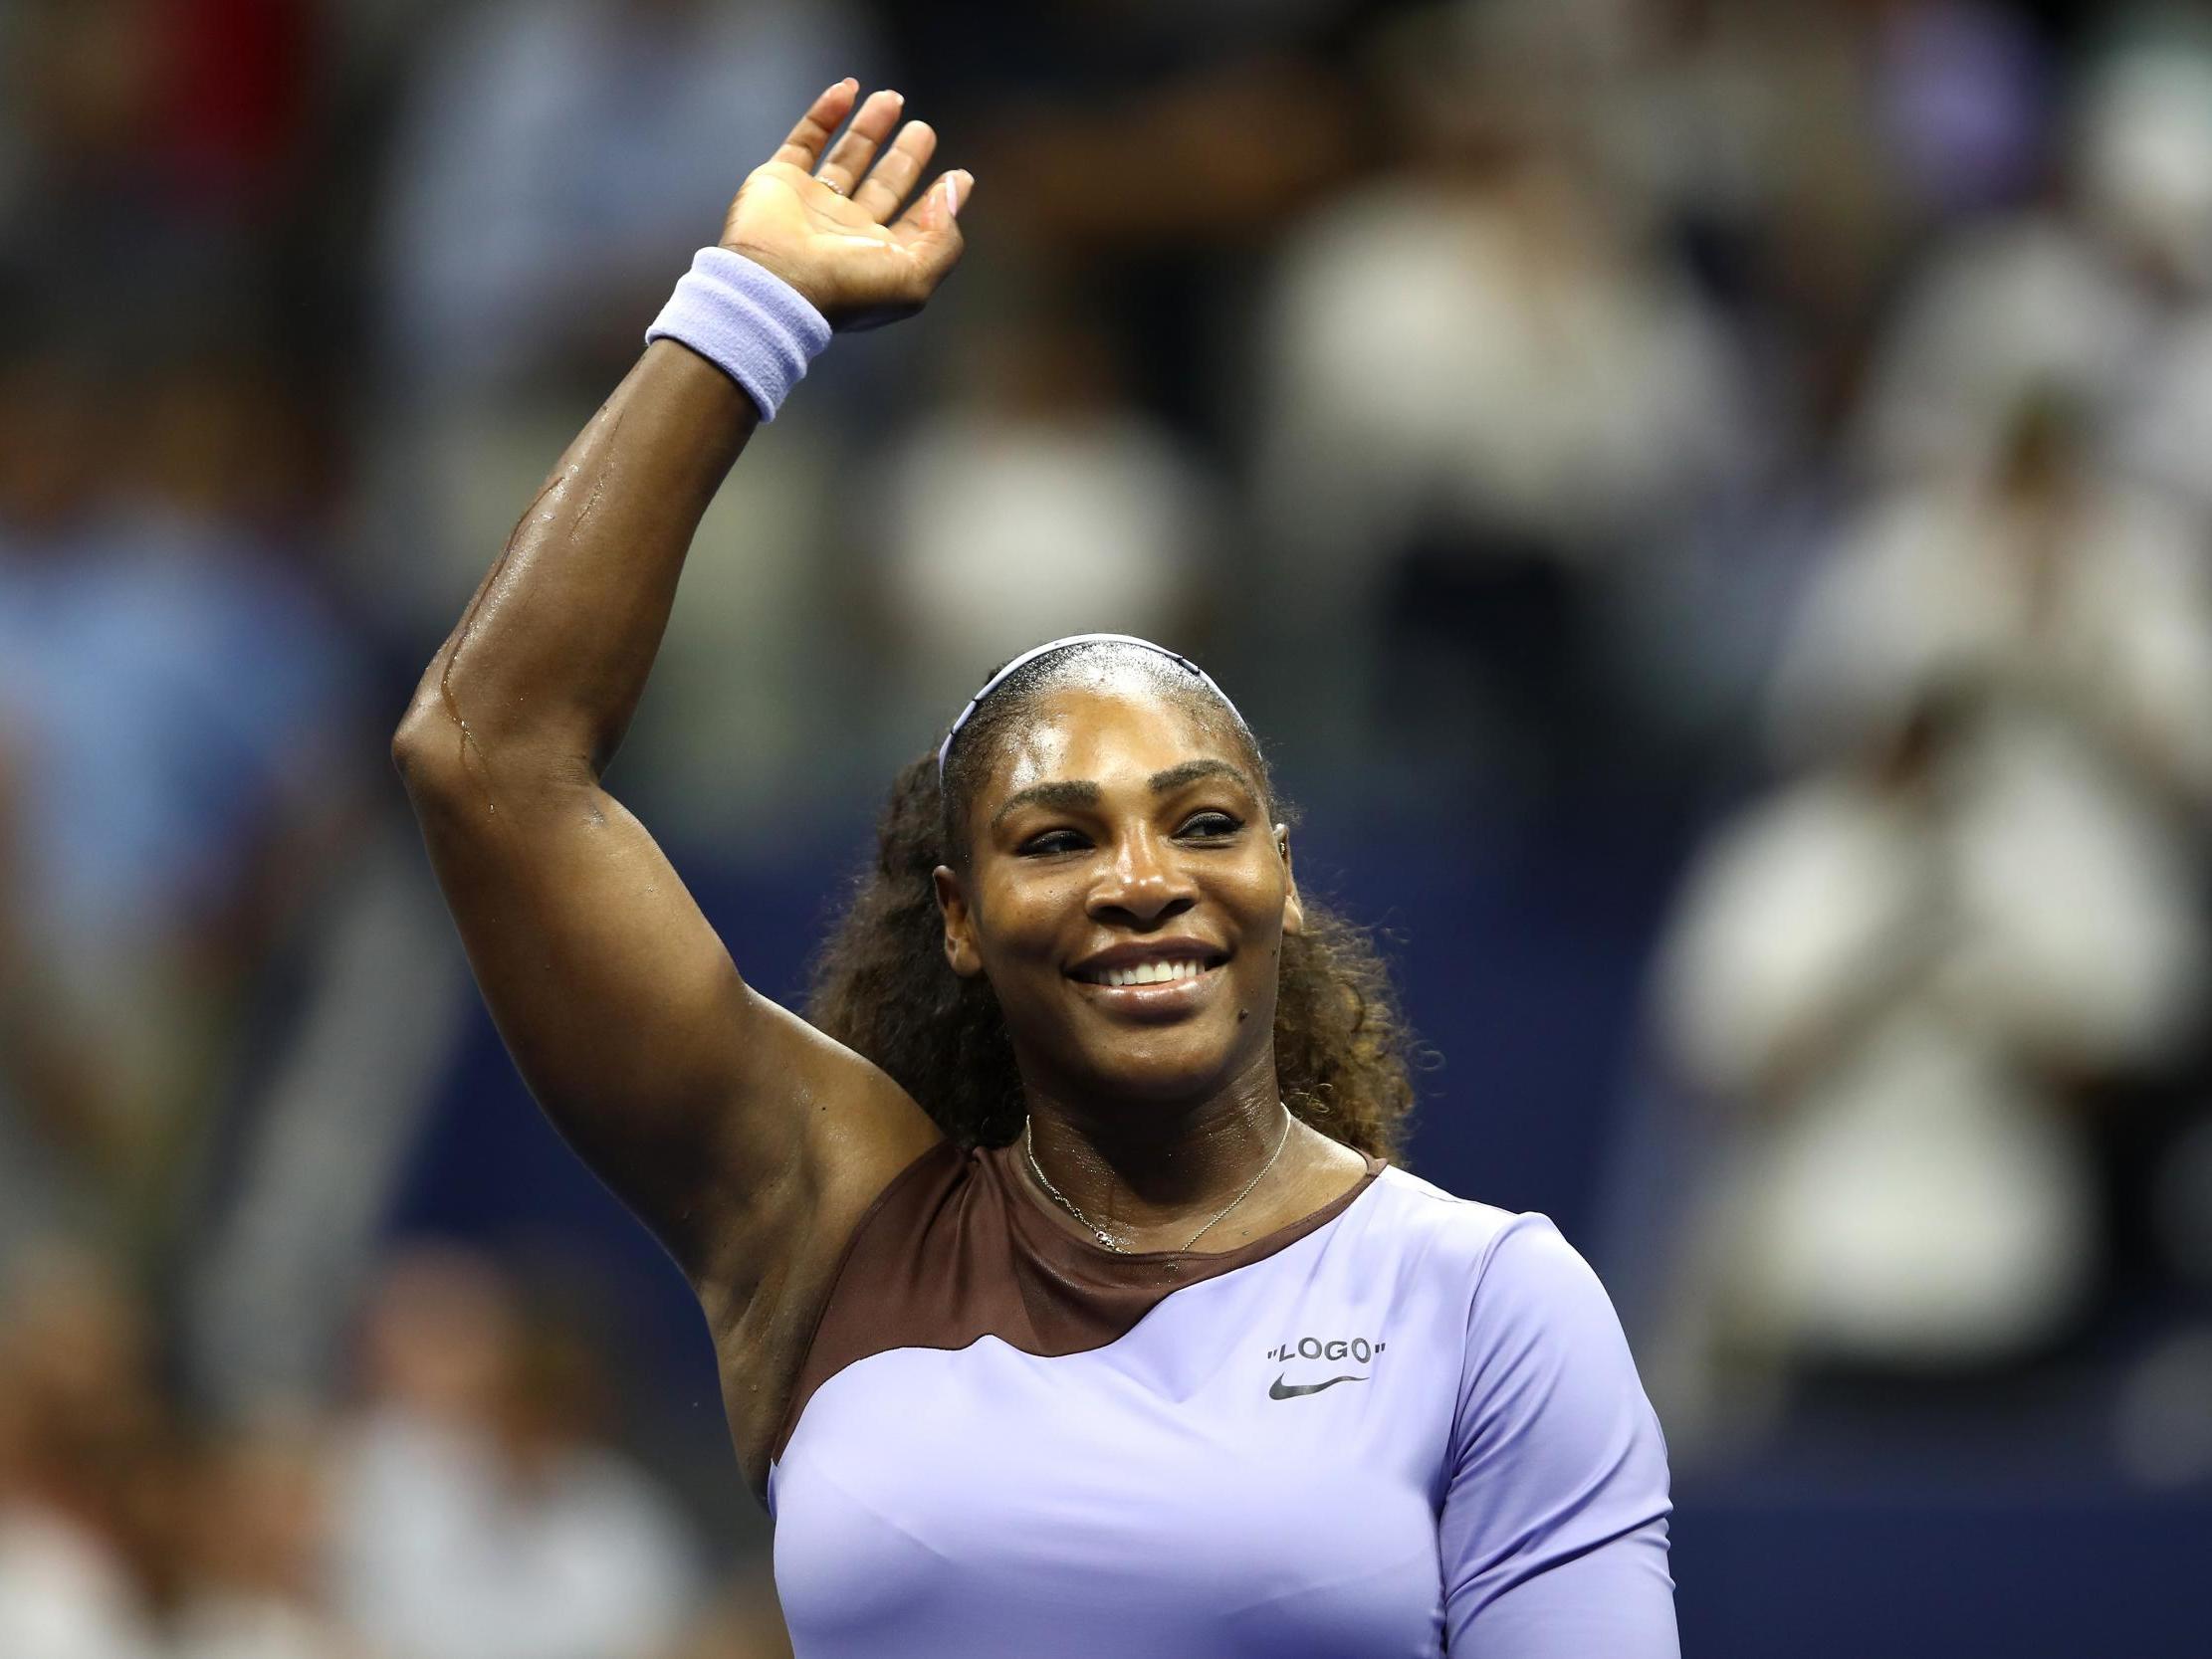 Serena Williams beat Anastasija Sevastova 6-2, 6-0 to reach the final